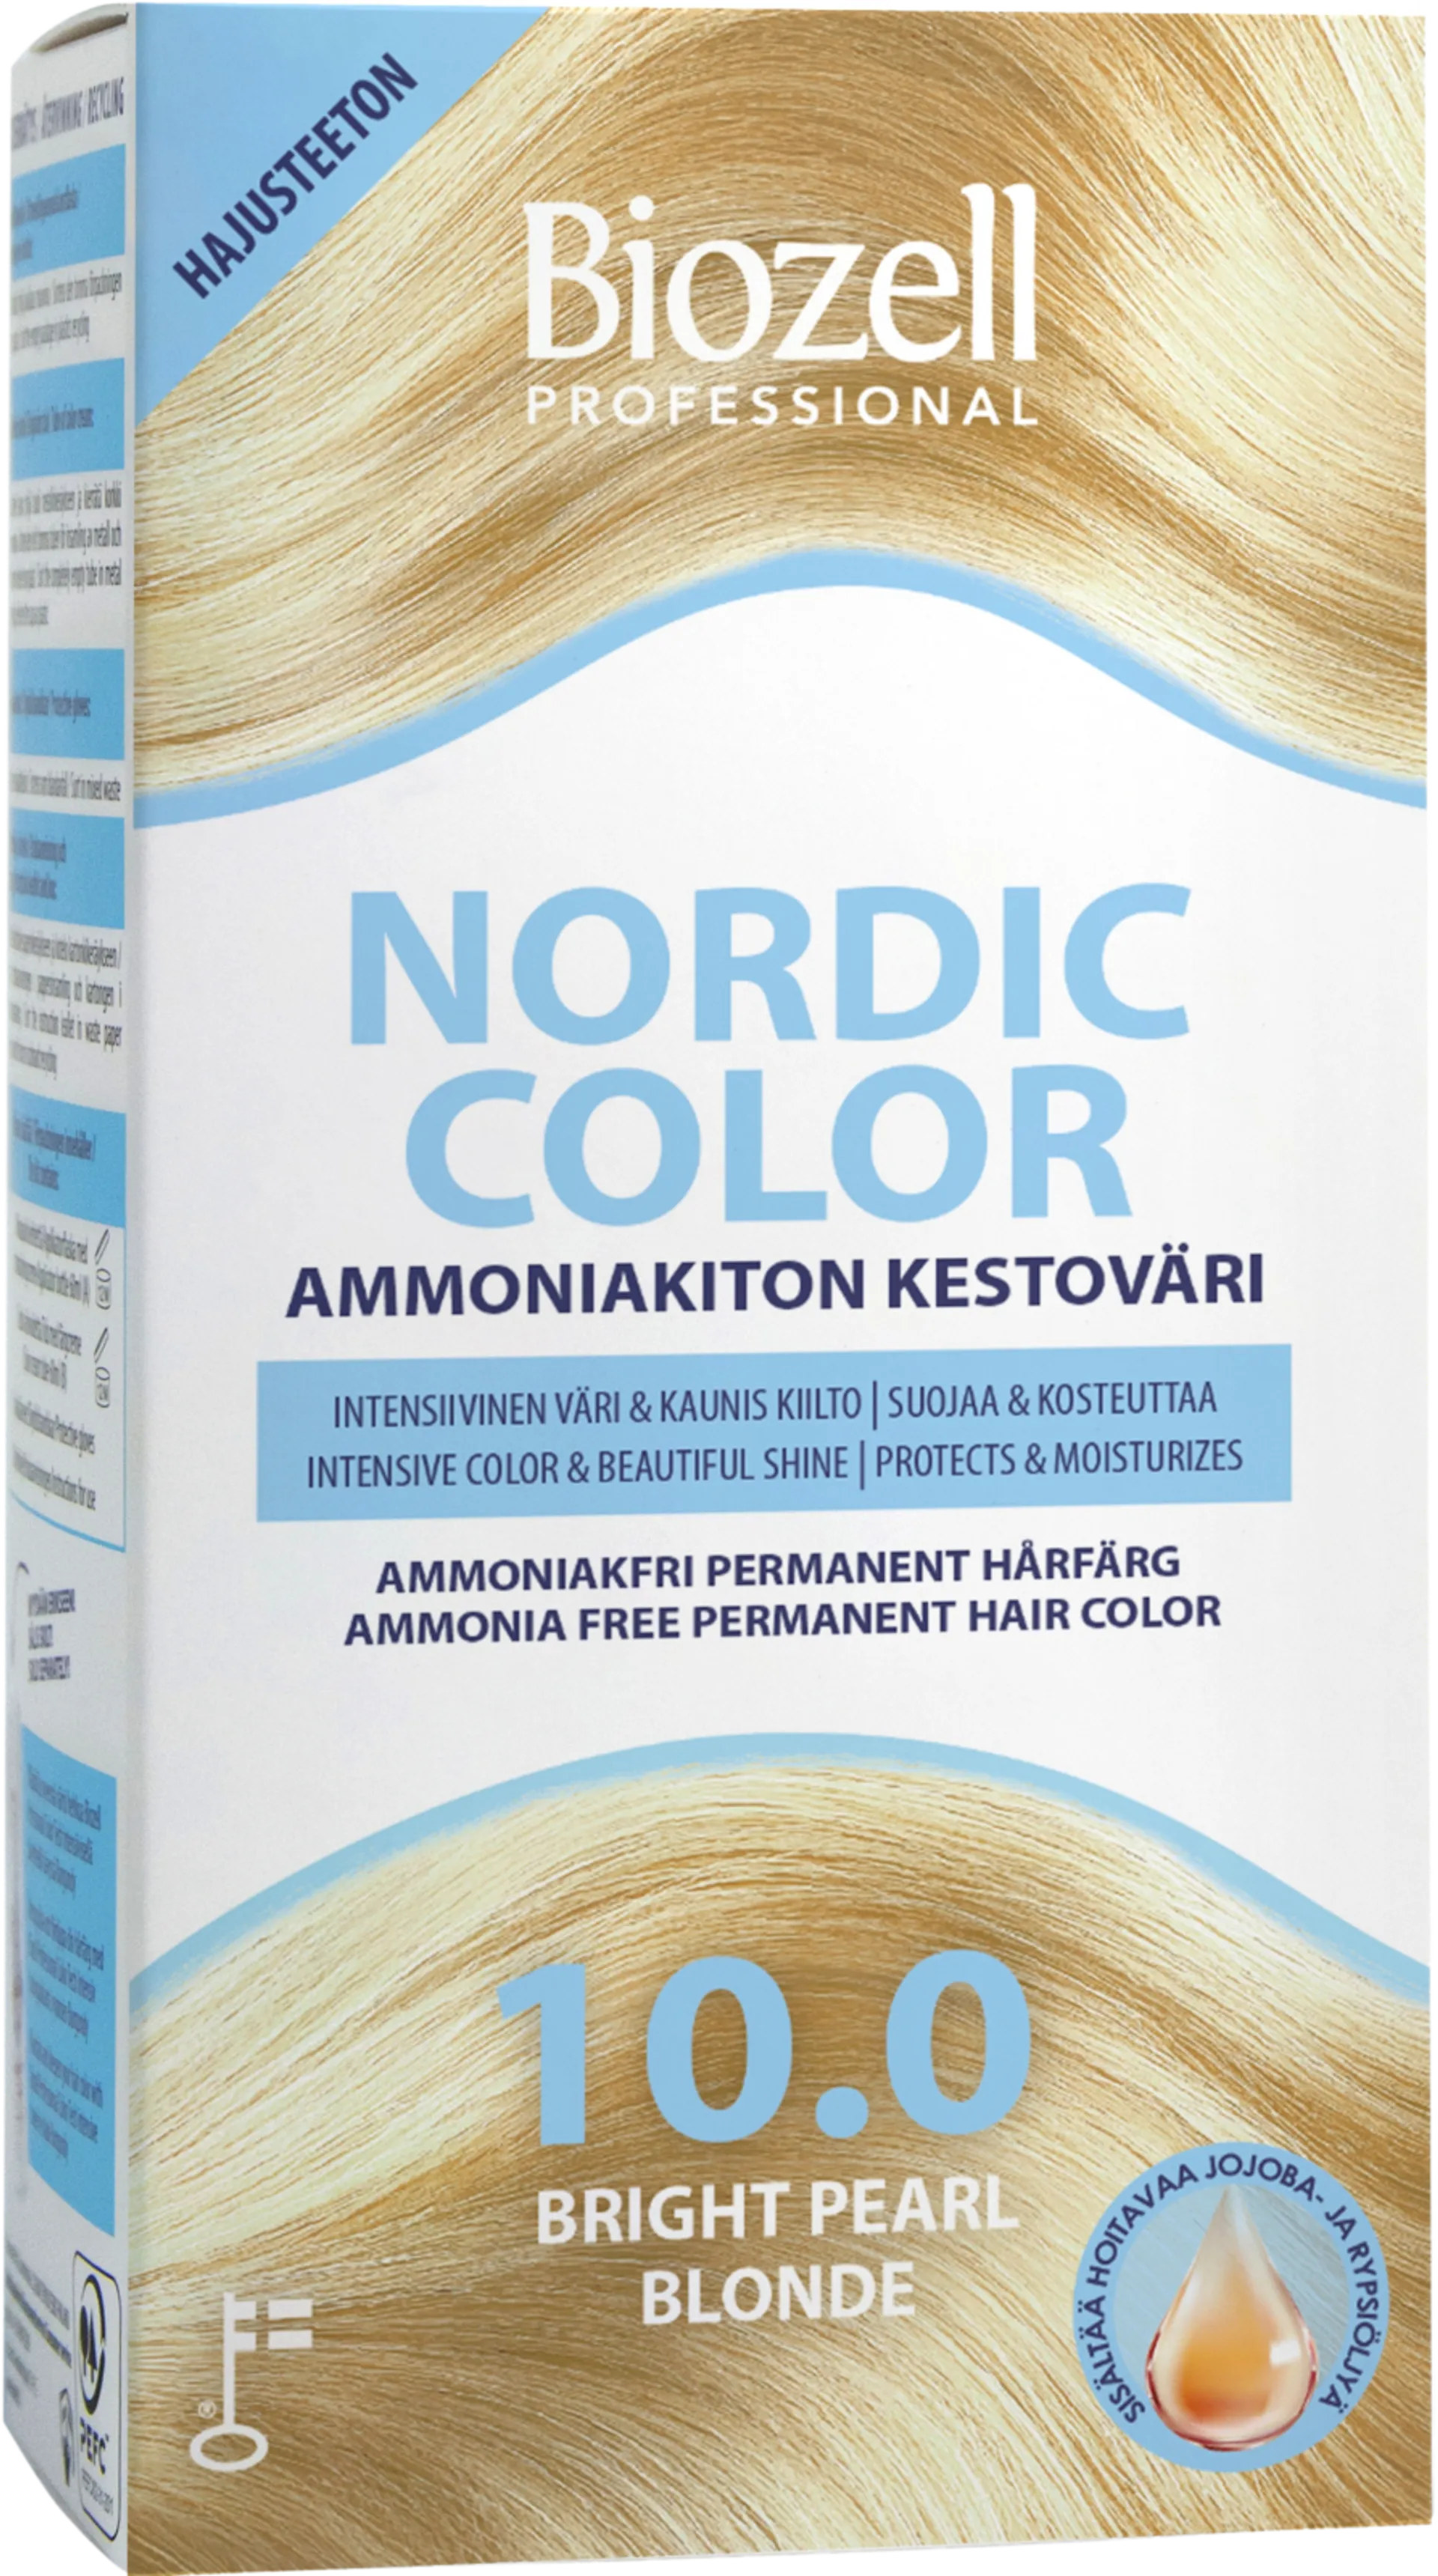 Biozell Professional Nordic Color ammoniakiton kestoväri Bright Pearl Blonde 10.0 2x60ml